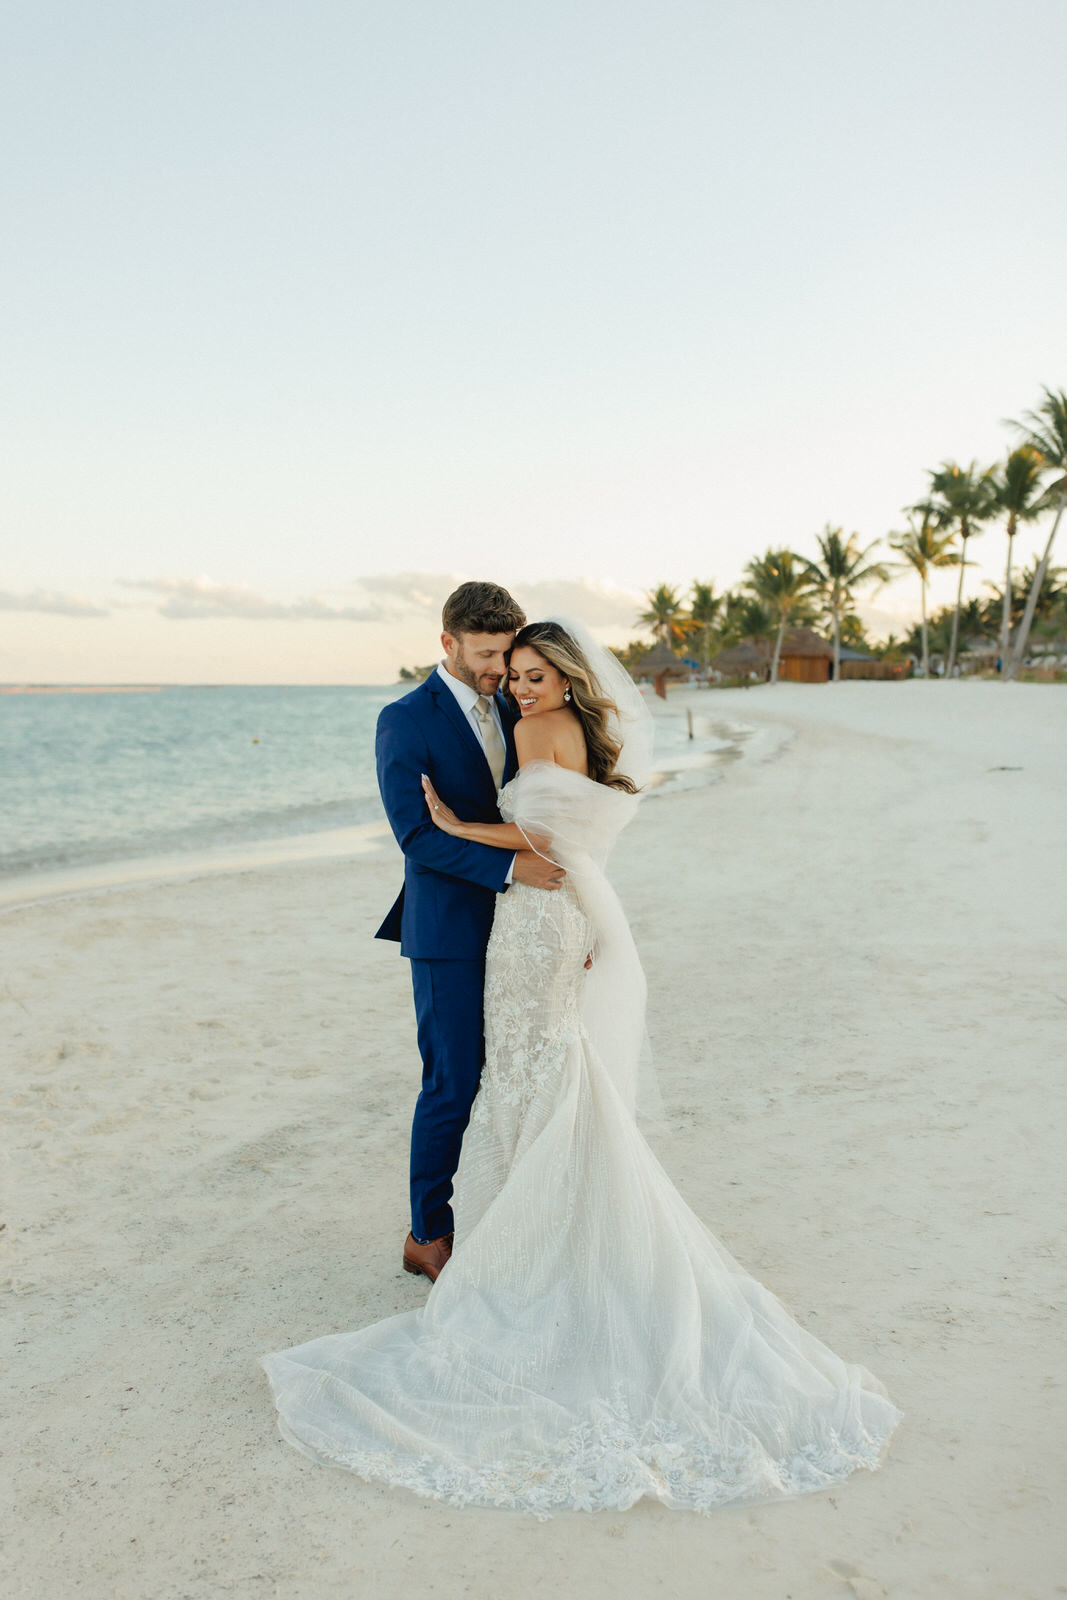 Wedding photographer Cancun